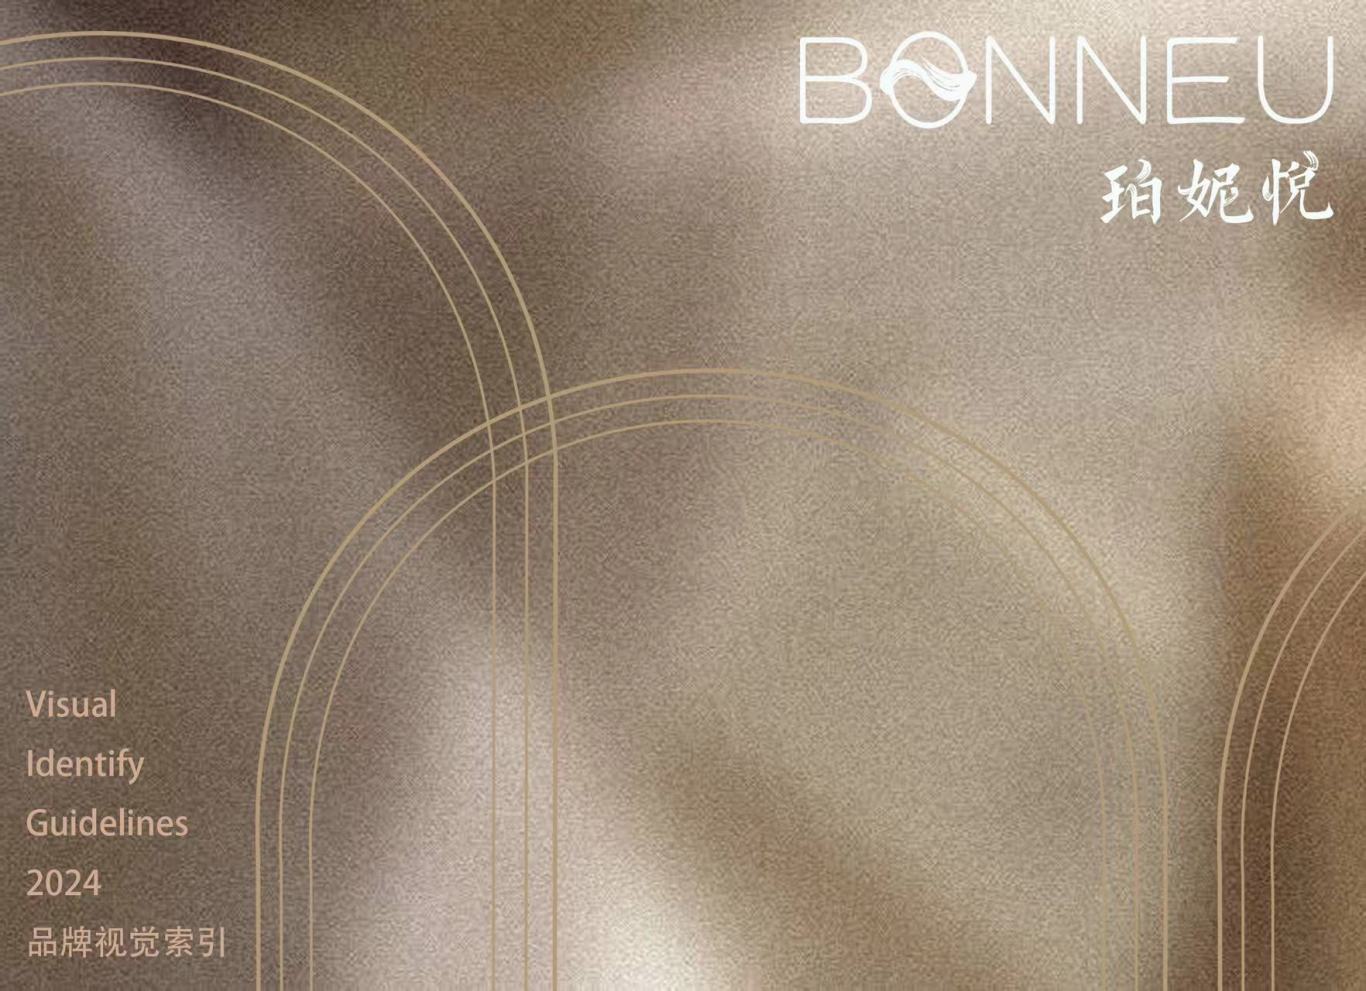 BONNEU国姿铂妮悦 民族护肤品牌 包装设计及品牌策划图0